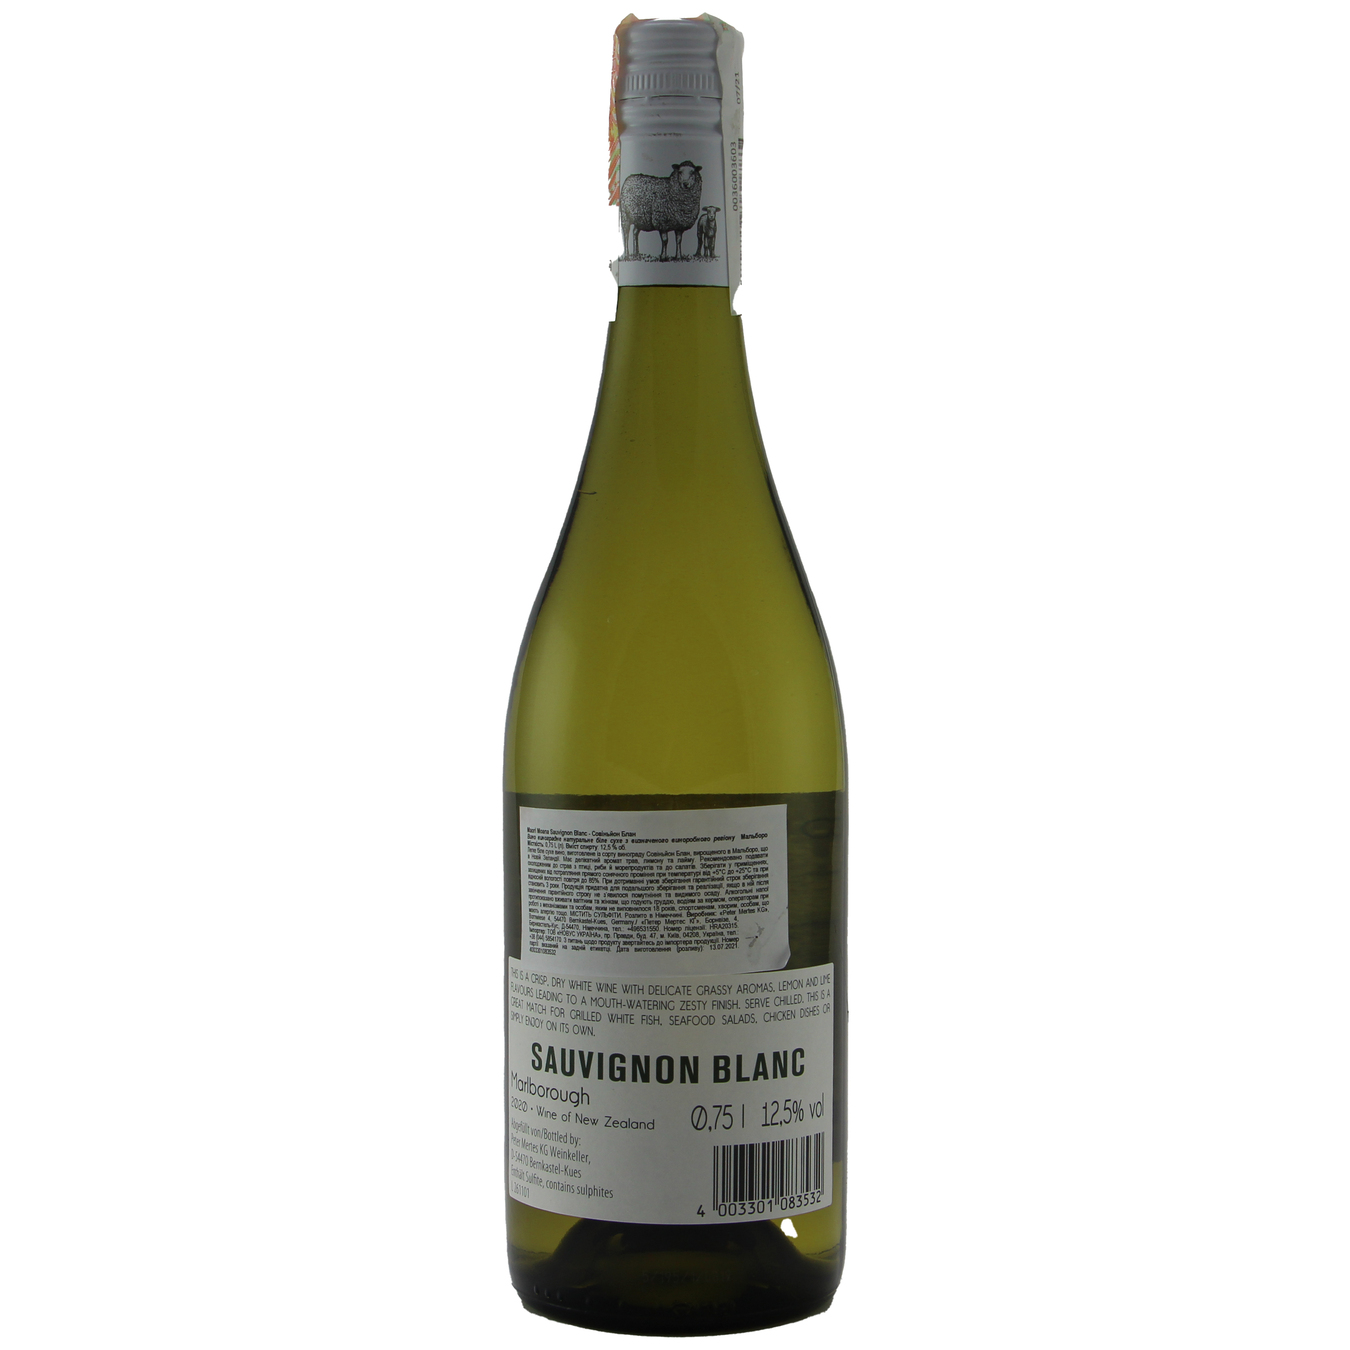 Maori Moana Sauvignon Blanc New Zealand white dry wine 12% 0,75l 2